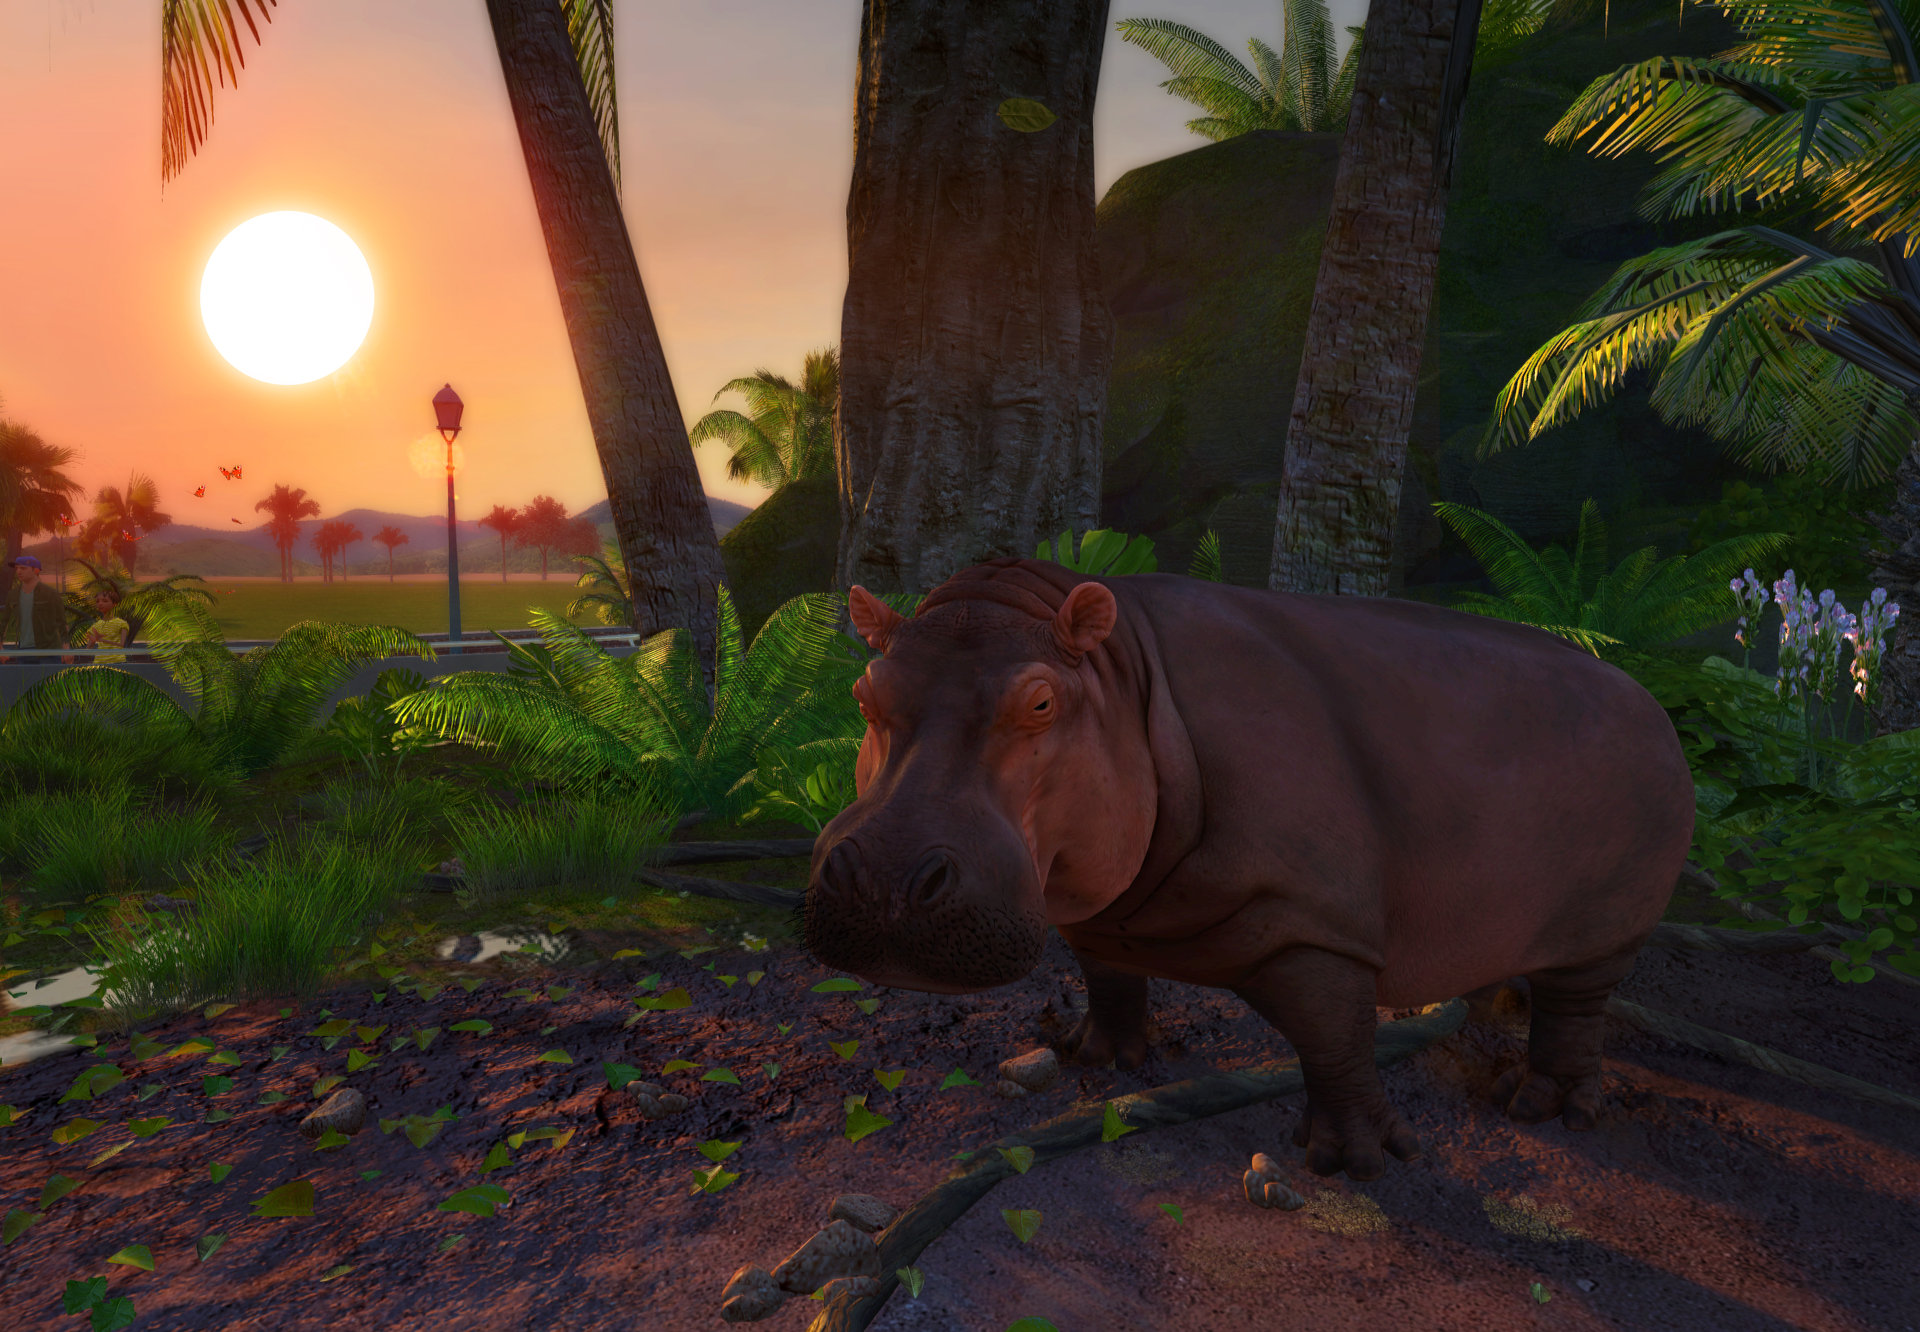 Zoo Tycoon 3: Hippopotamus 